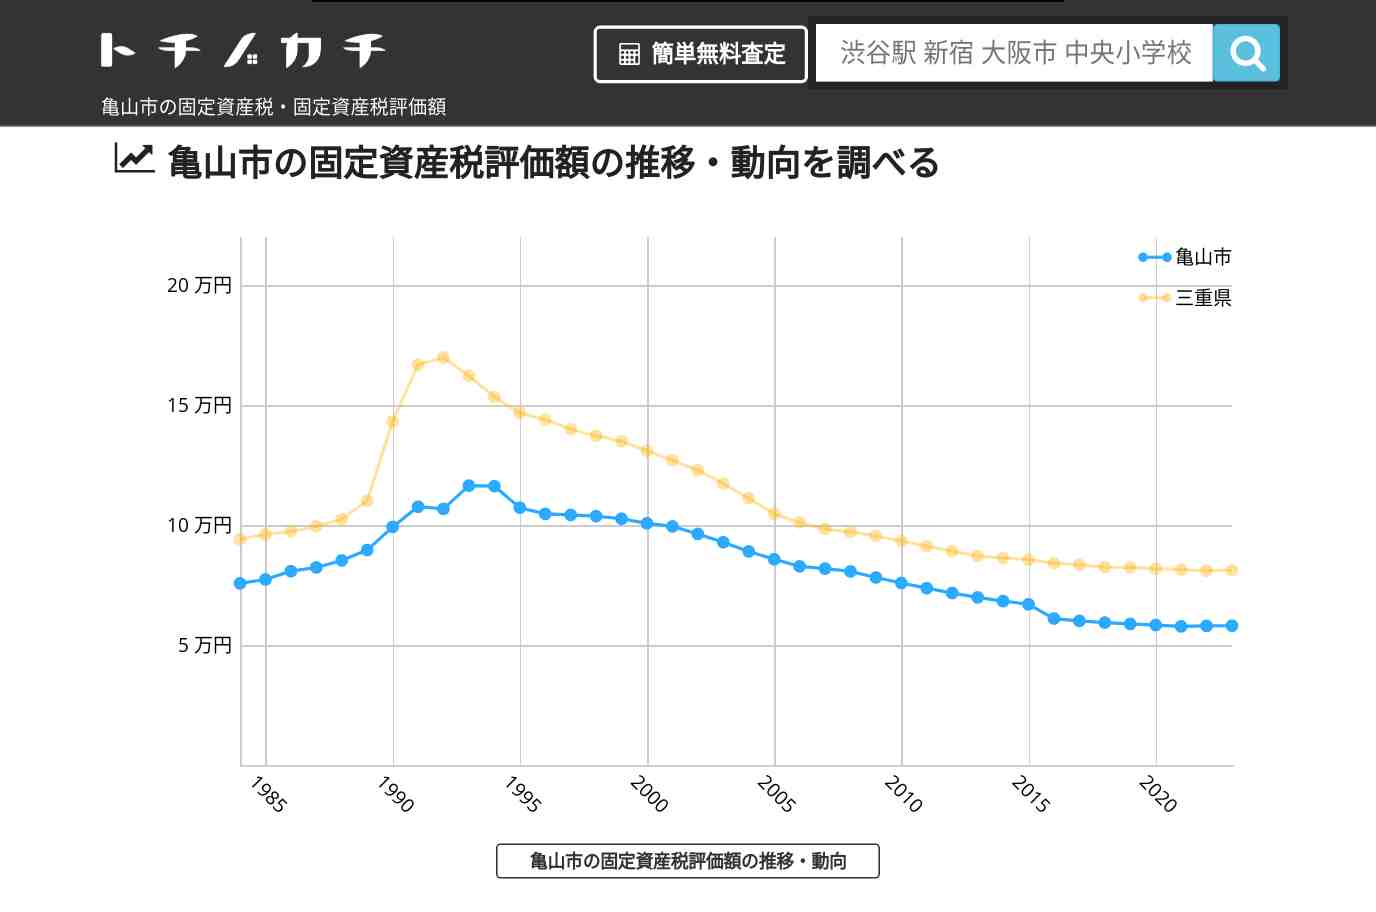 関中学校(三重県 亀山市)周辺の固定資産税・固定資産税評価額 | トチノカチ